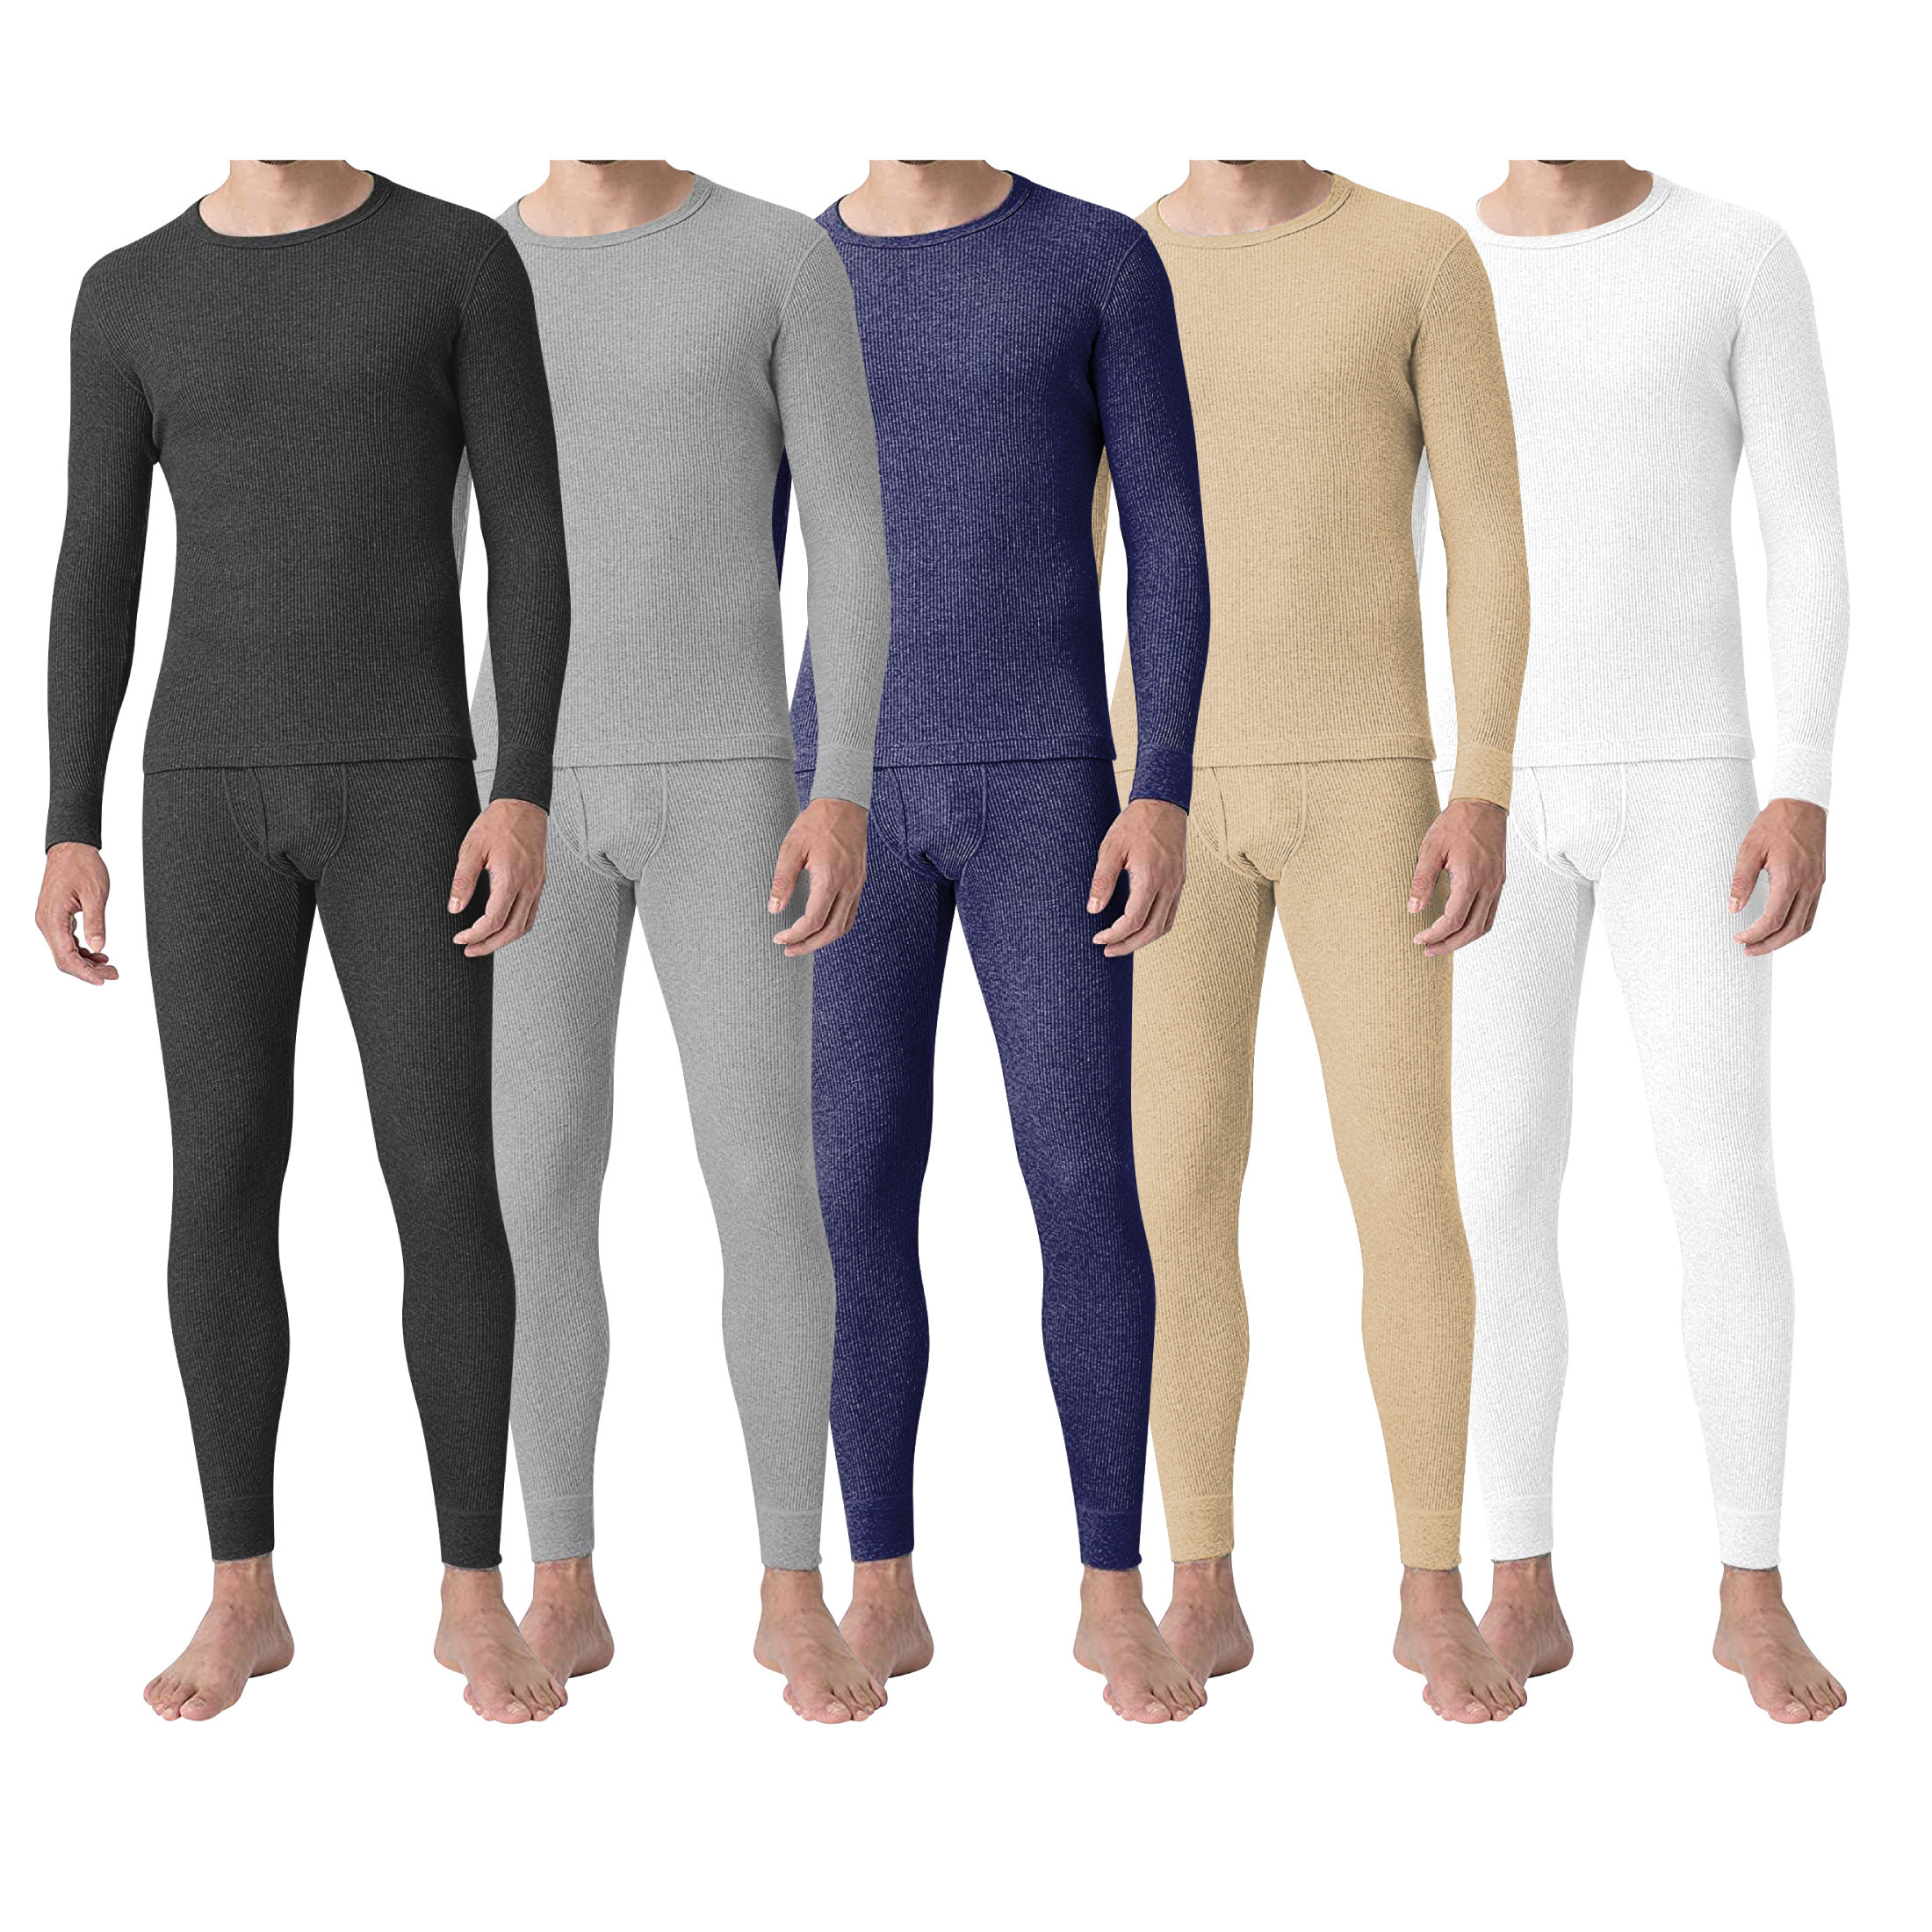 2-Piece: Men's Super Soft Cotton Waffle Knit Winter Thermal Underwear Set - Grey, Small